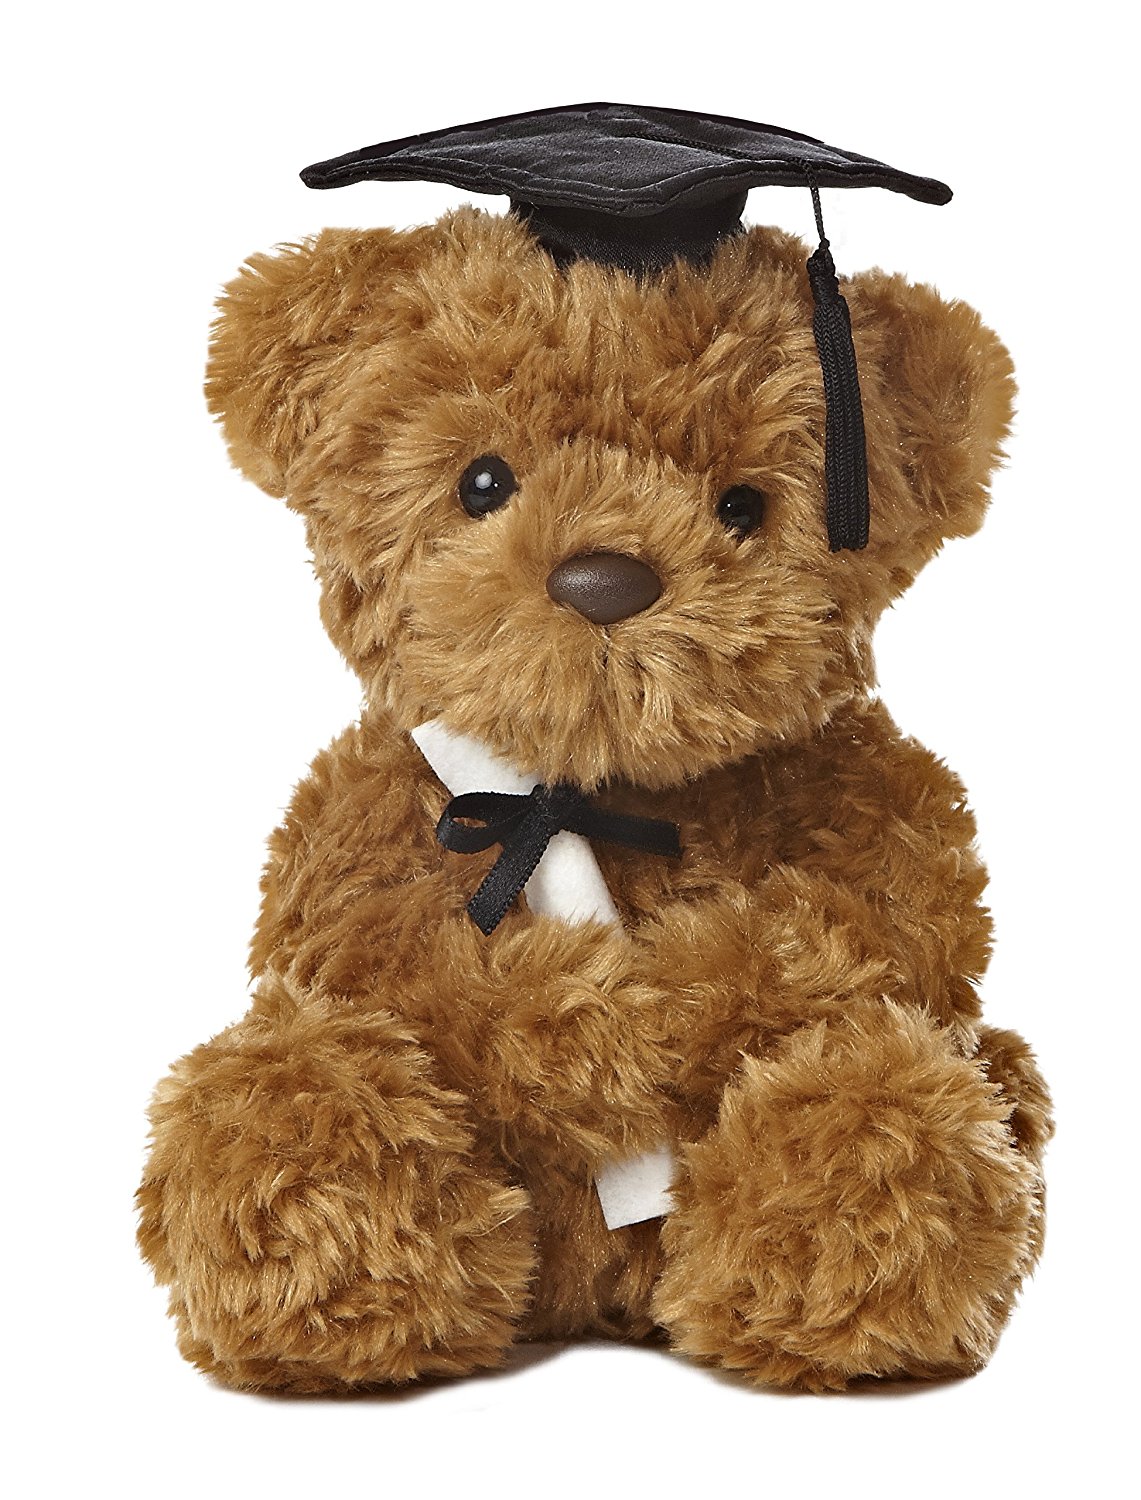 Custom graduate plush teddy bear toys